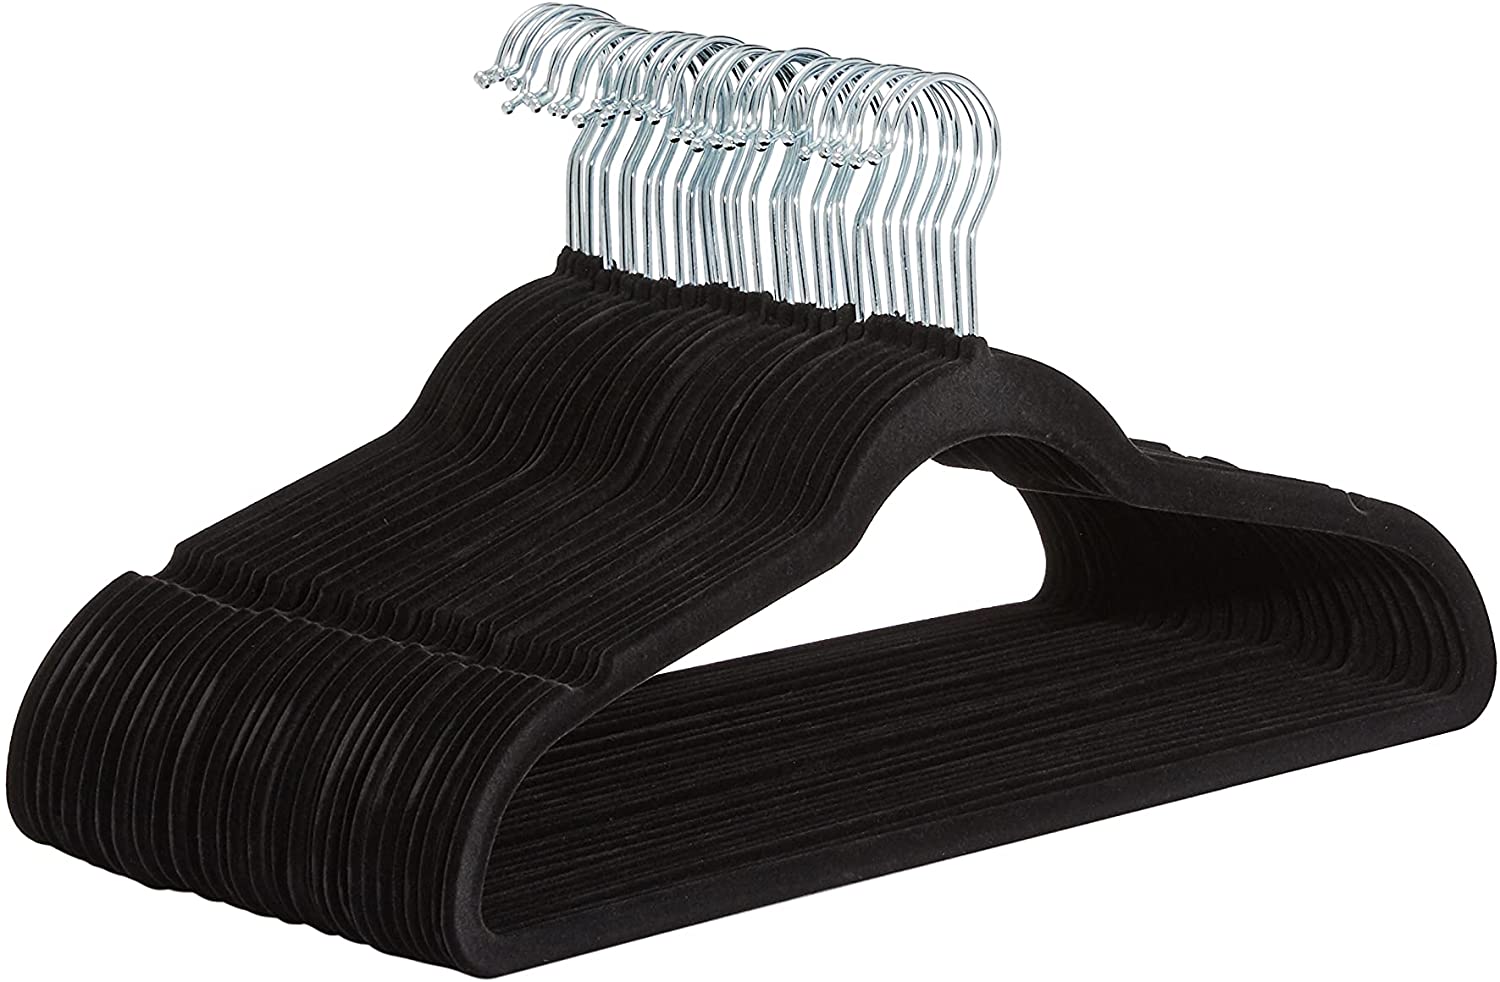 Skinny hangers available on Amazon